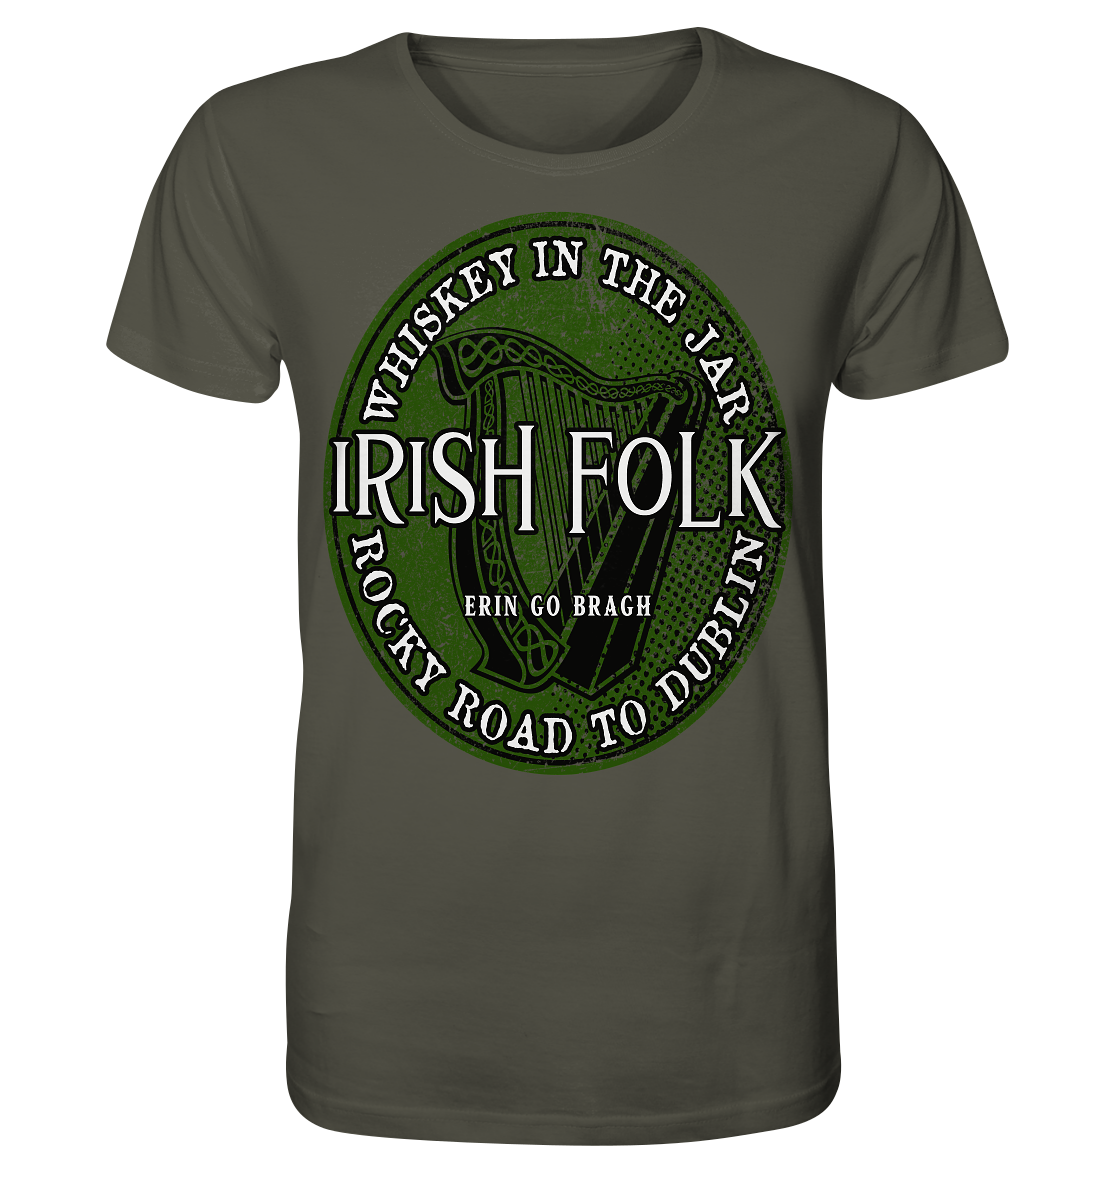 Irish Folk "Erin Go Bragh" - Organic Shirt